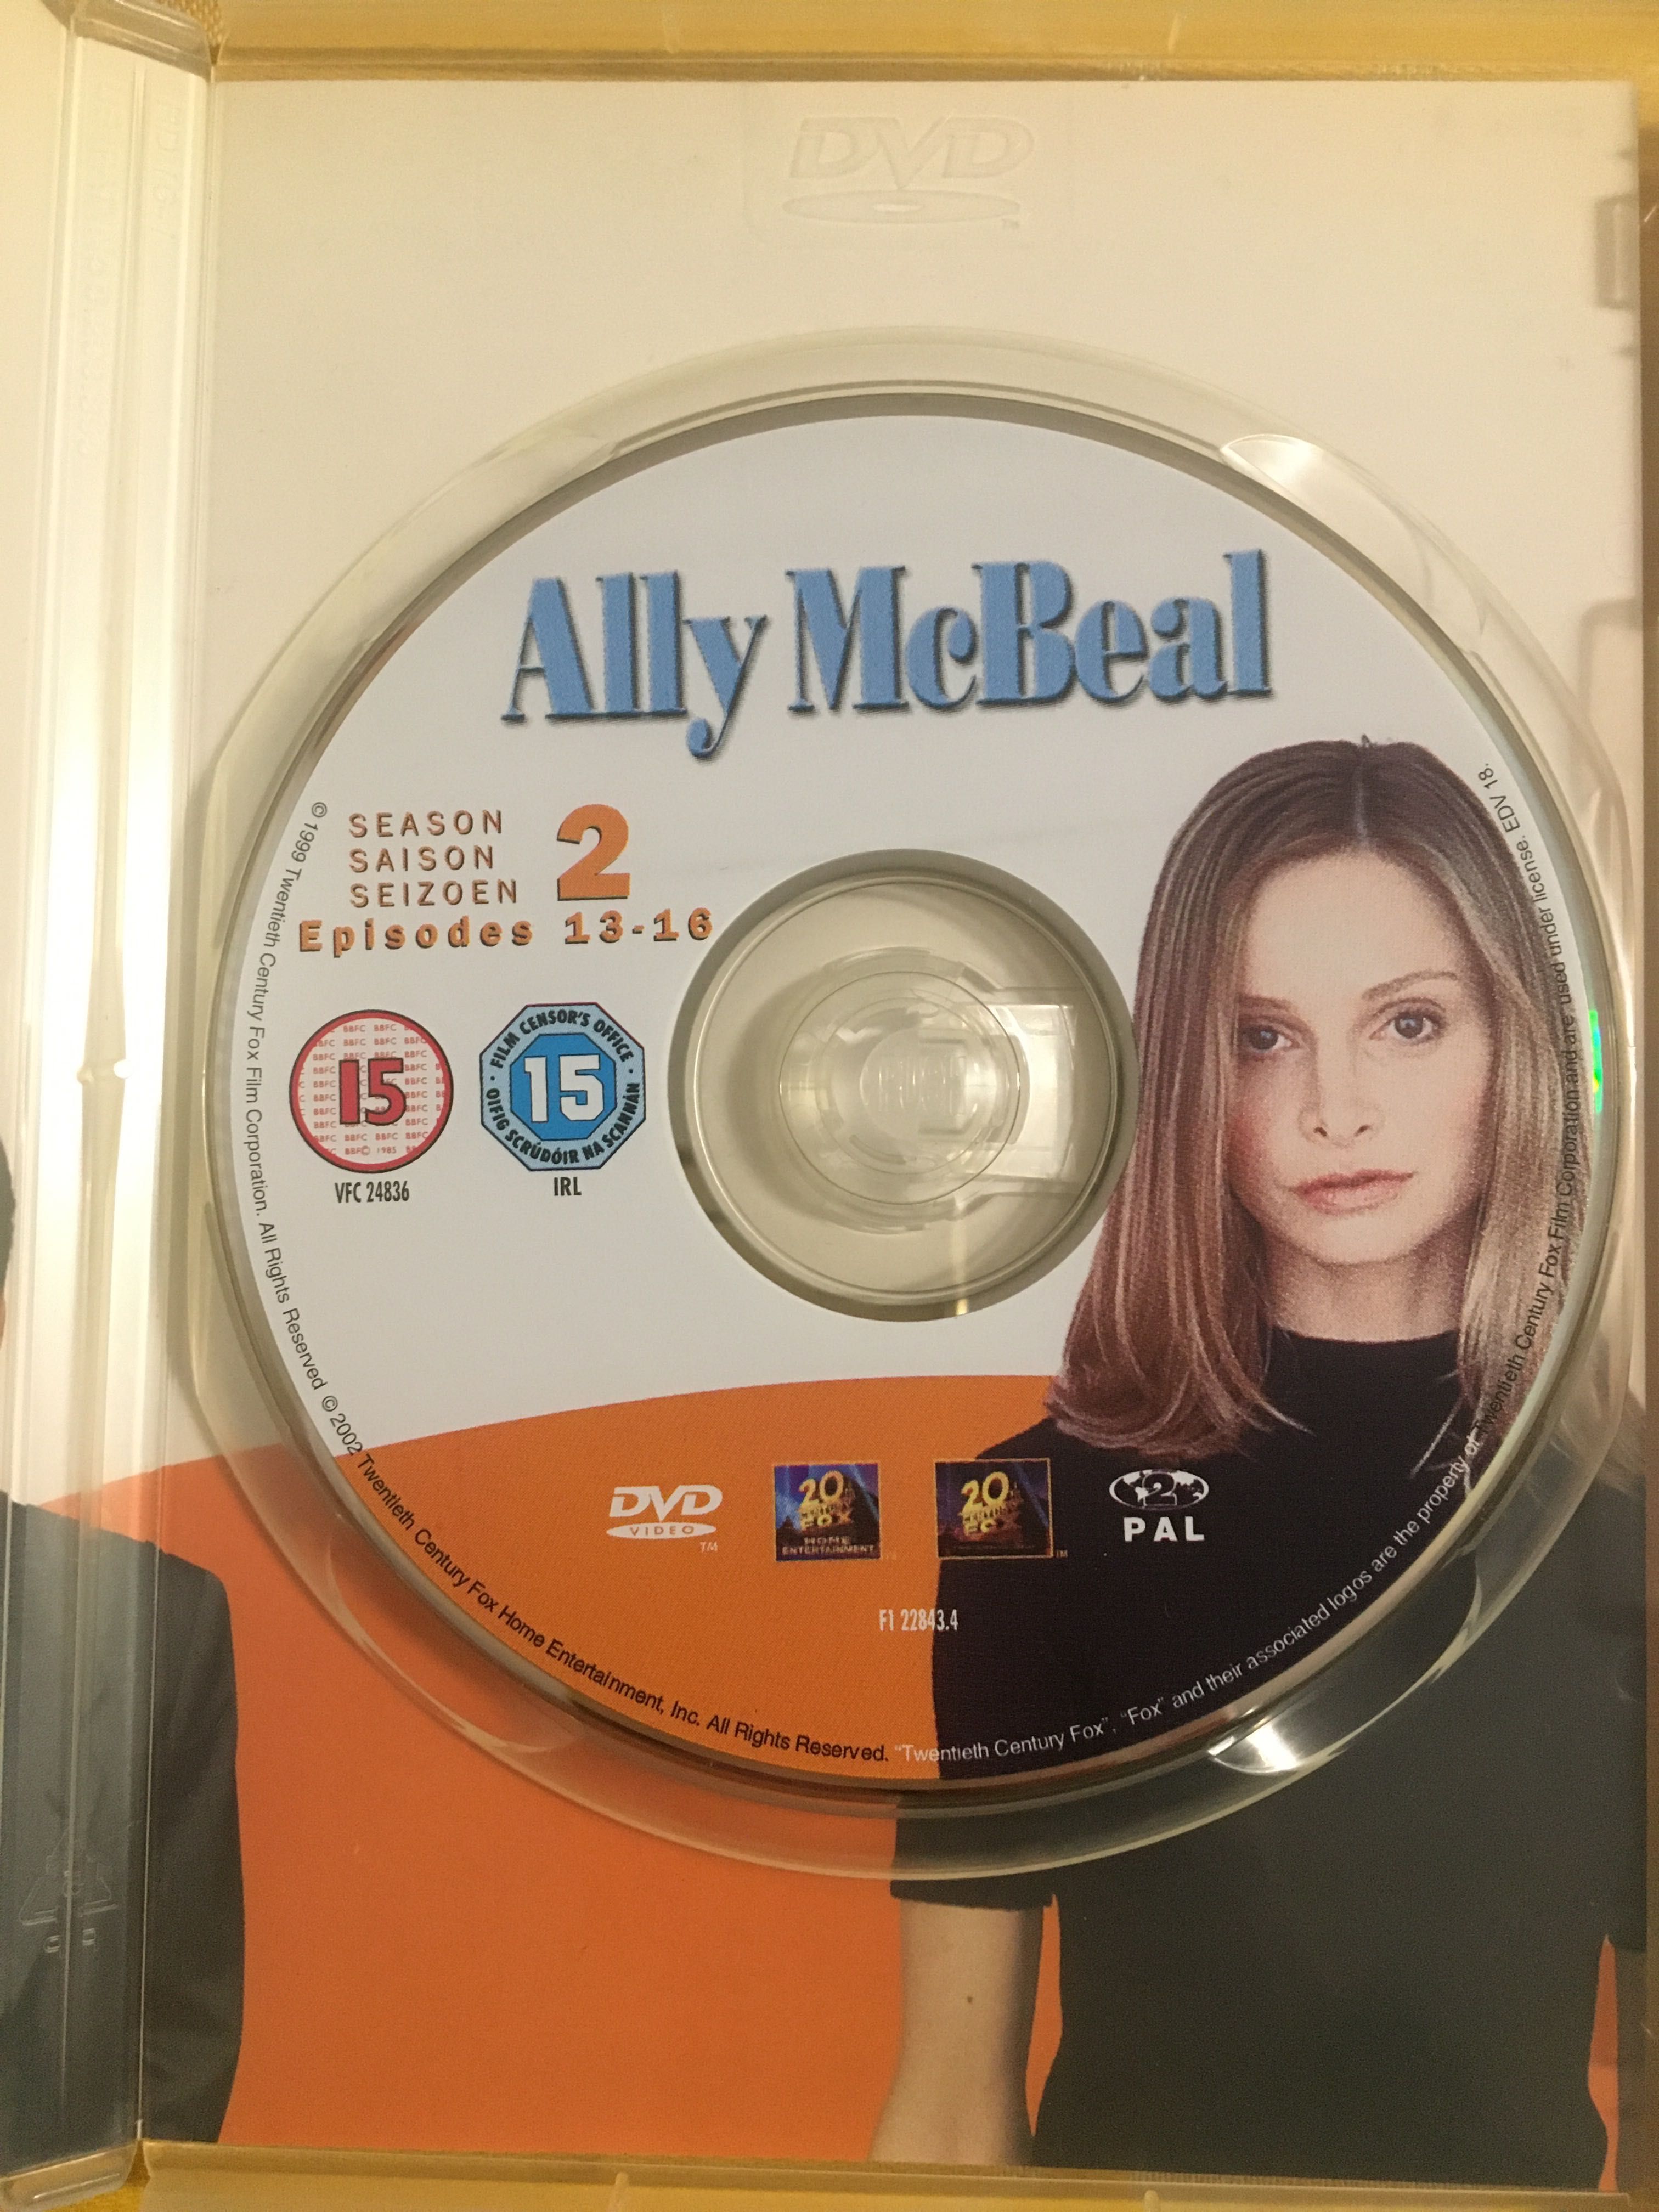 Ally McBeal - Season 2
3DVD